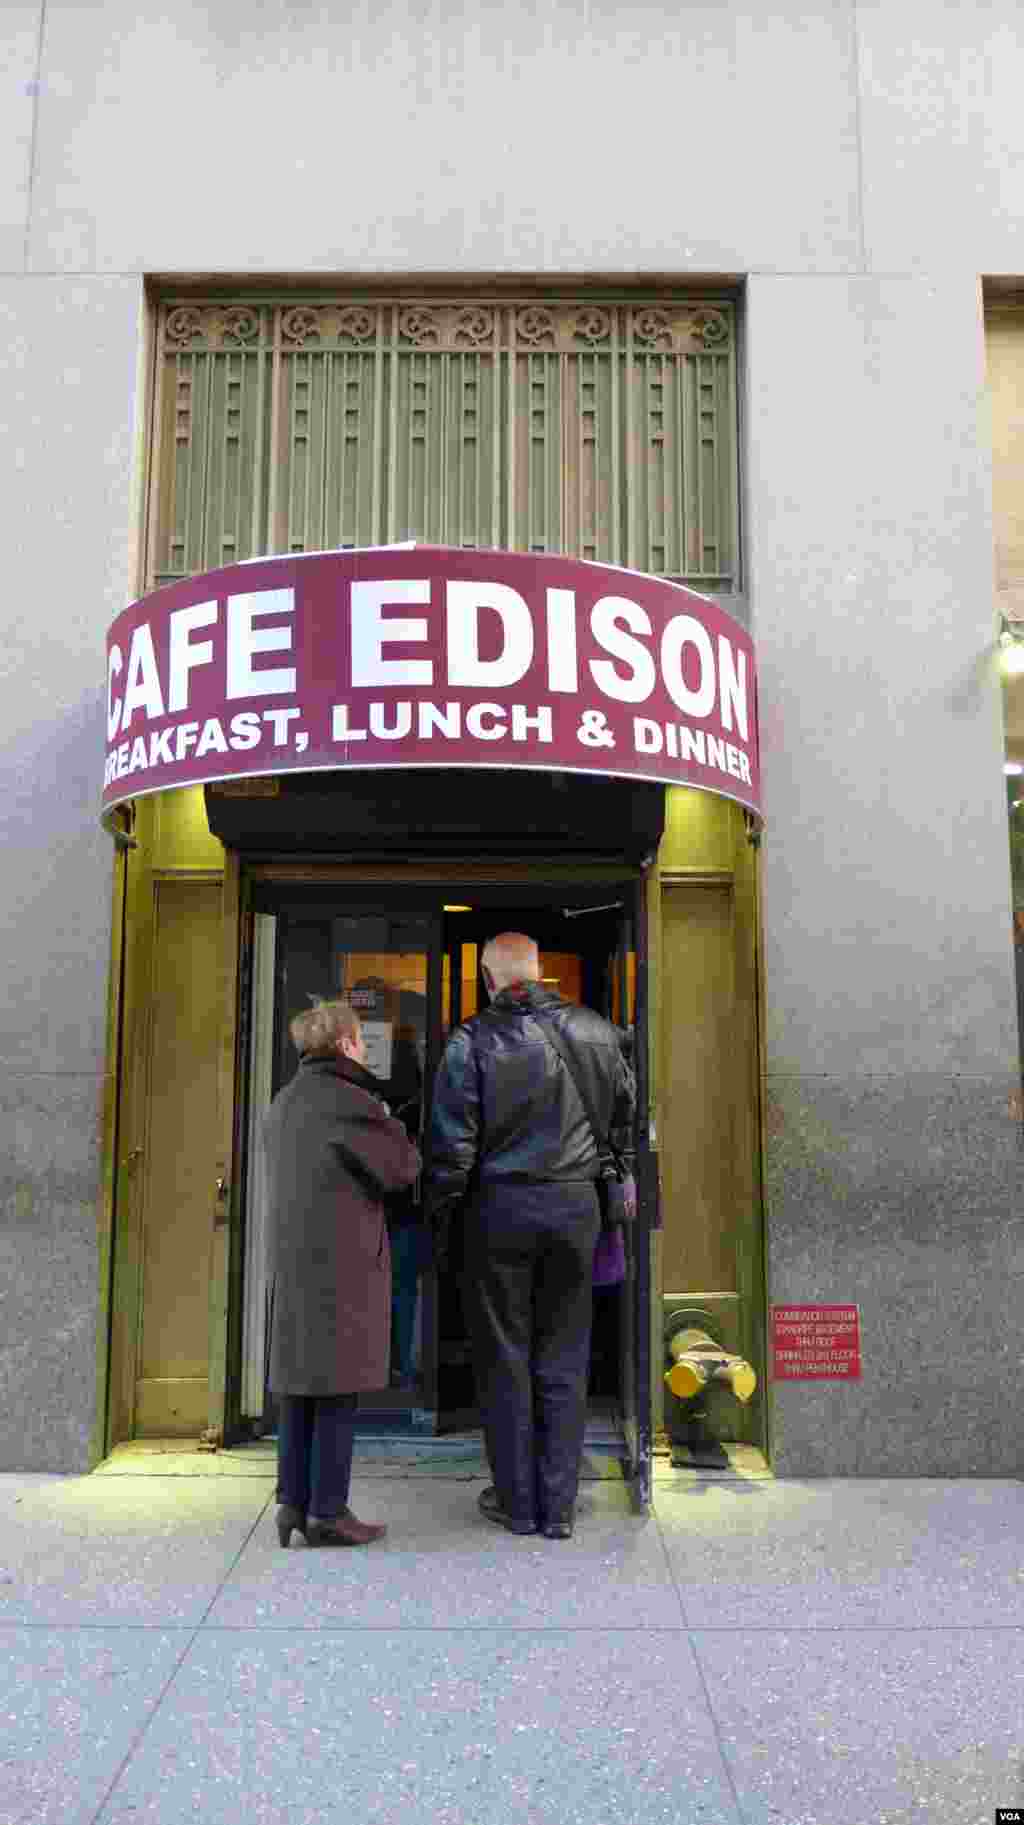 The entrance to Café Edison, near New York’s Times Square, VOA / Jeff Lunden.